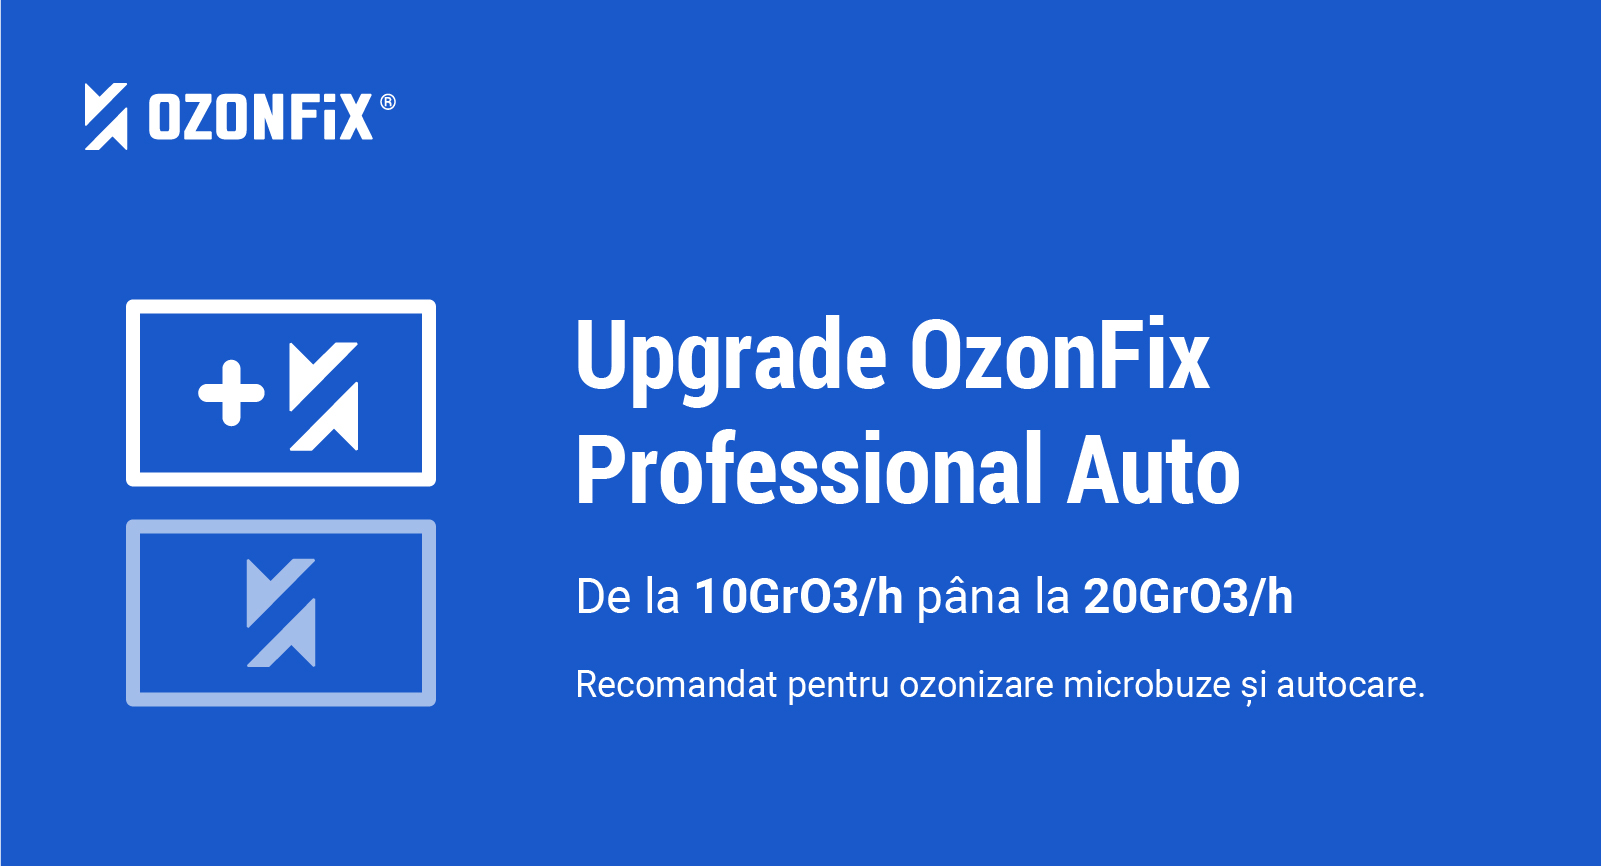 Upgrade 1 OzonFix Professional Auto